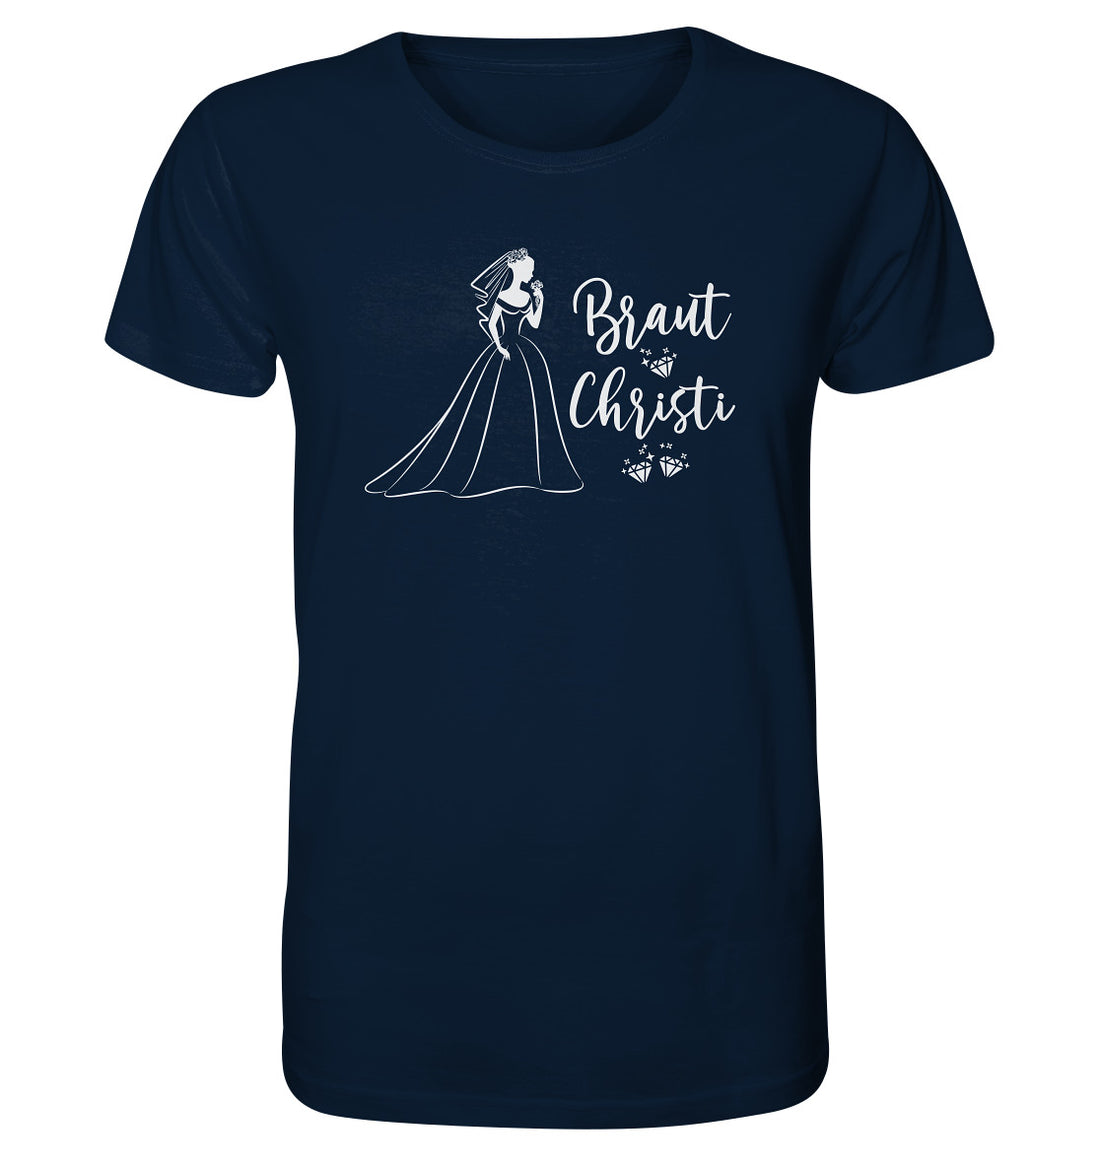 Braut Christi - Organic Shirt